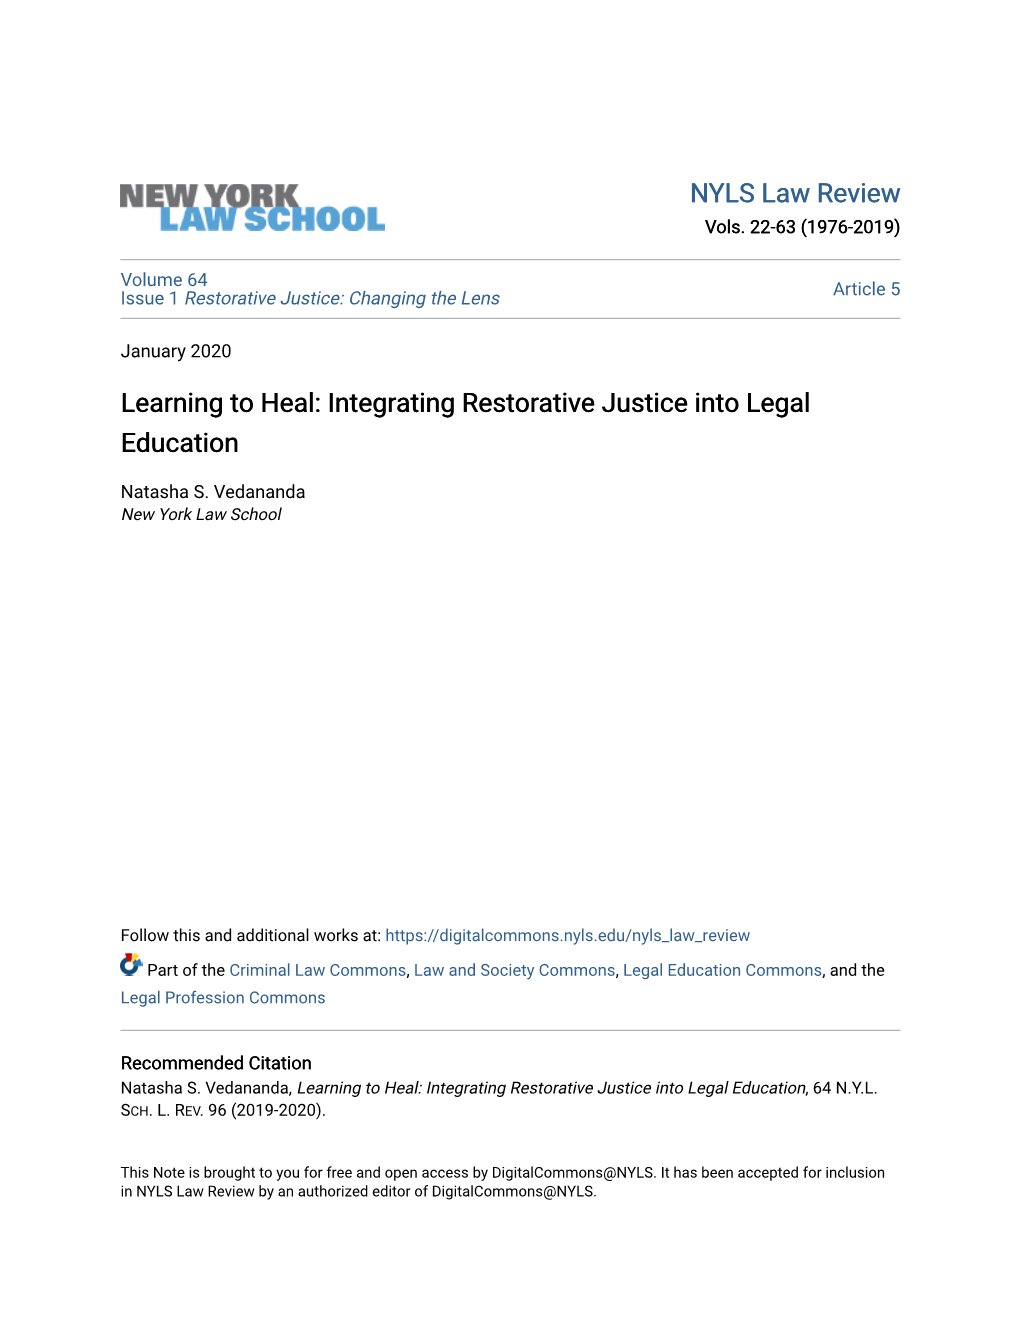 Integrating Restorative Justice Into Legal Education